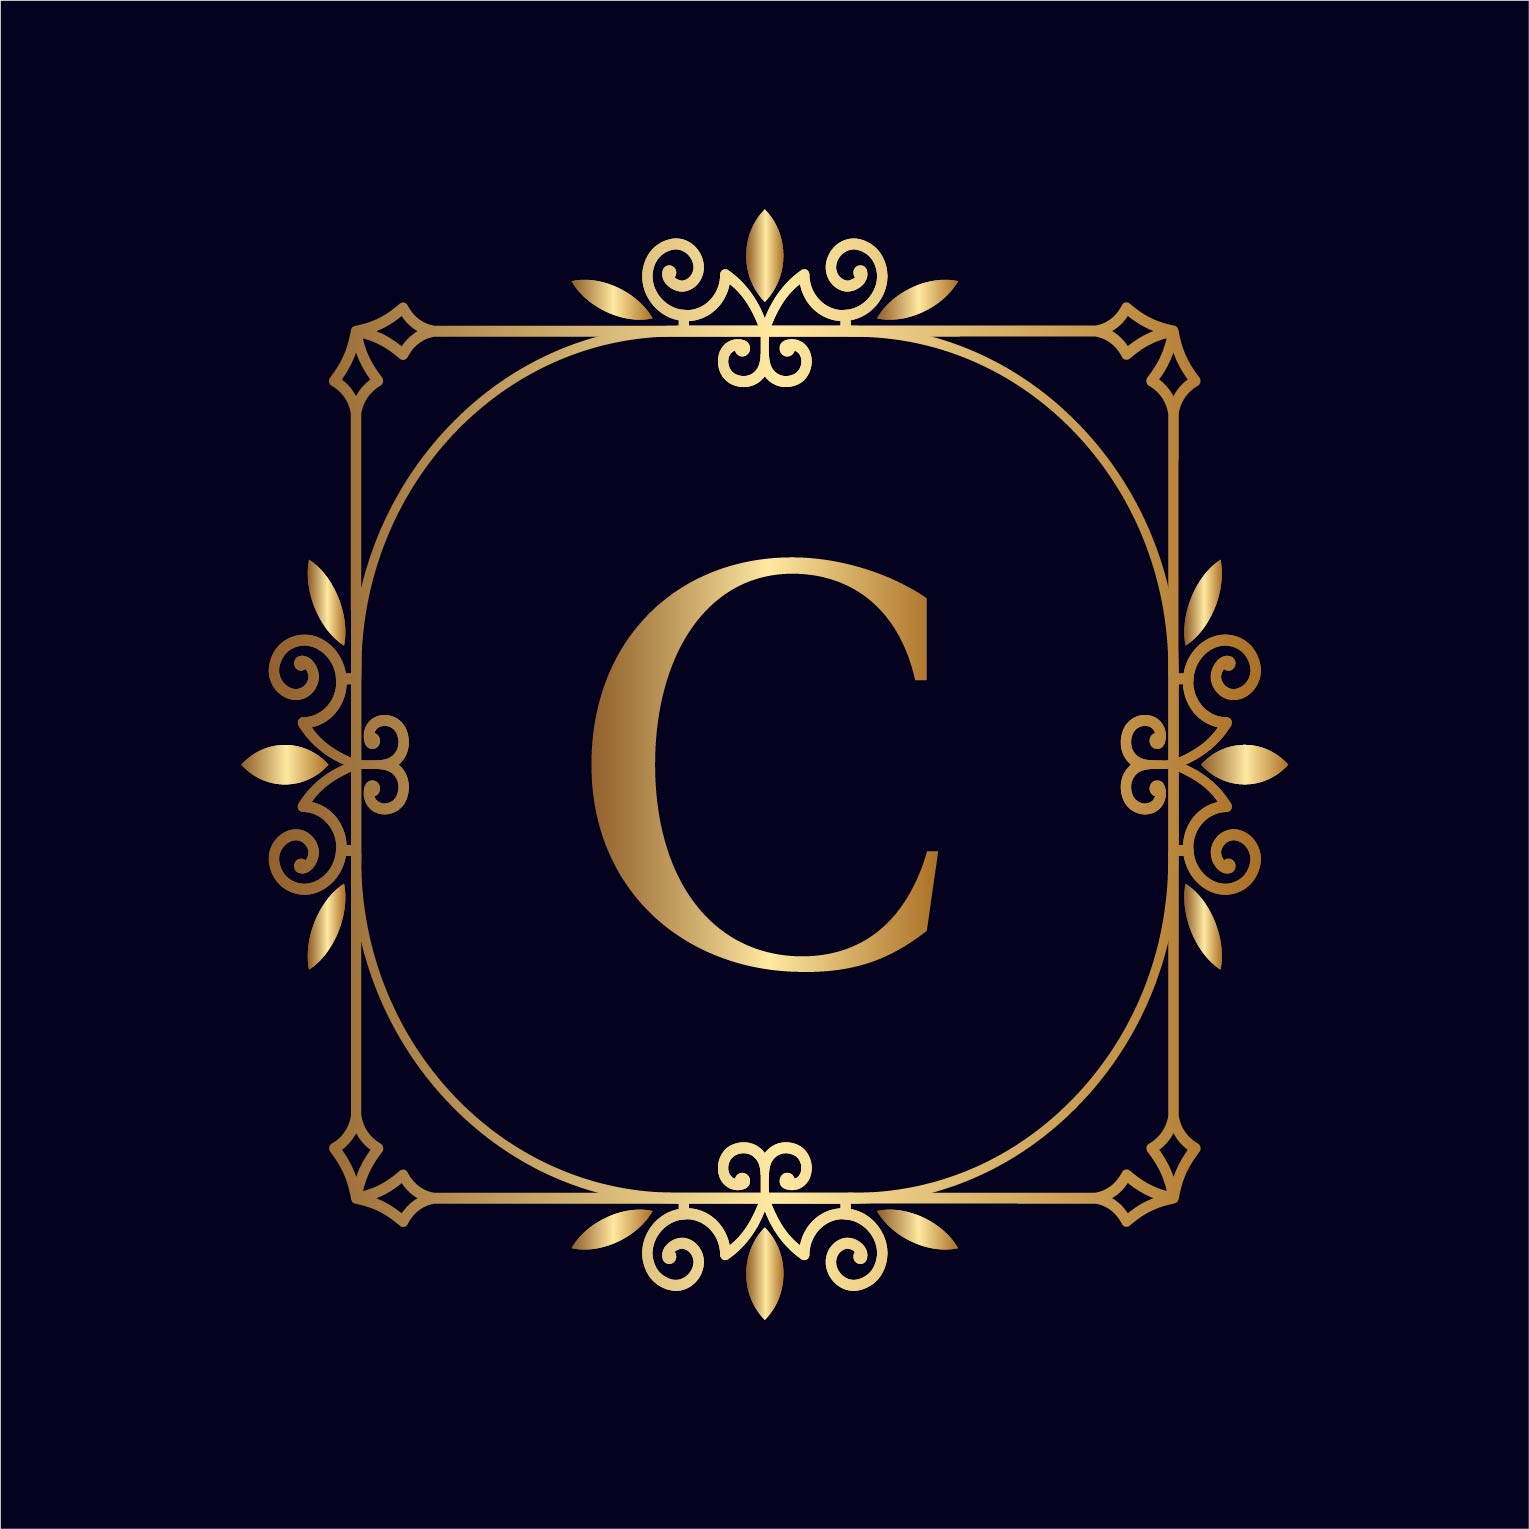 Artistic Gold Letter C Logos Design preview image.